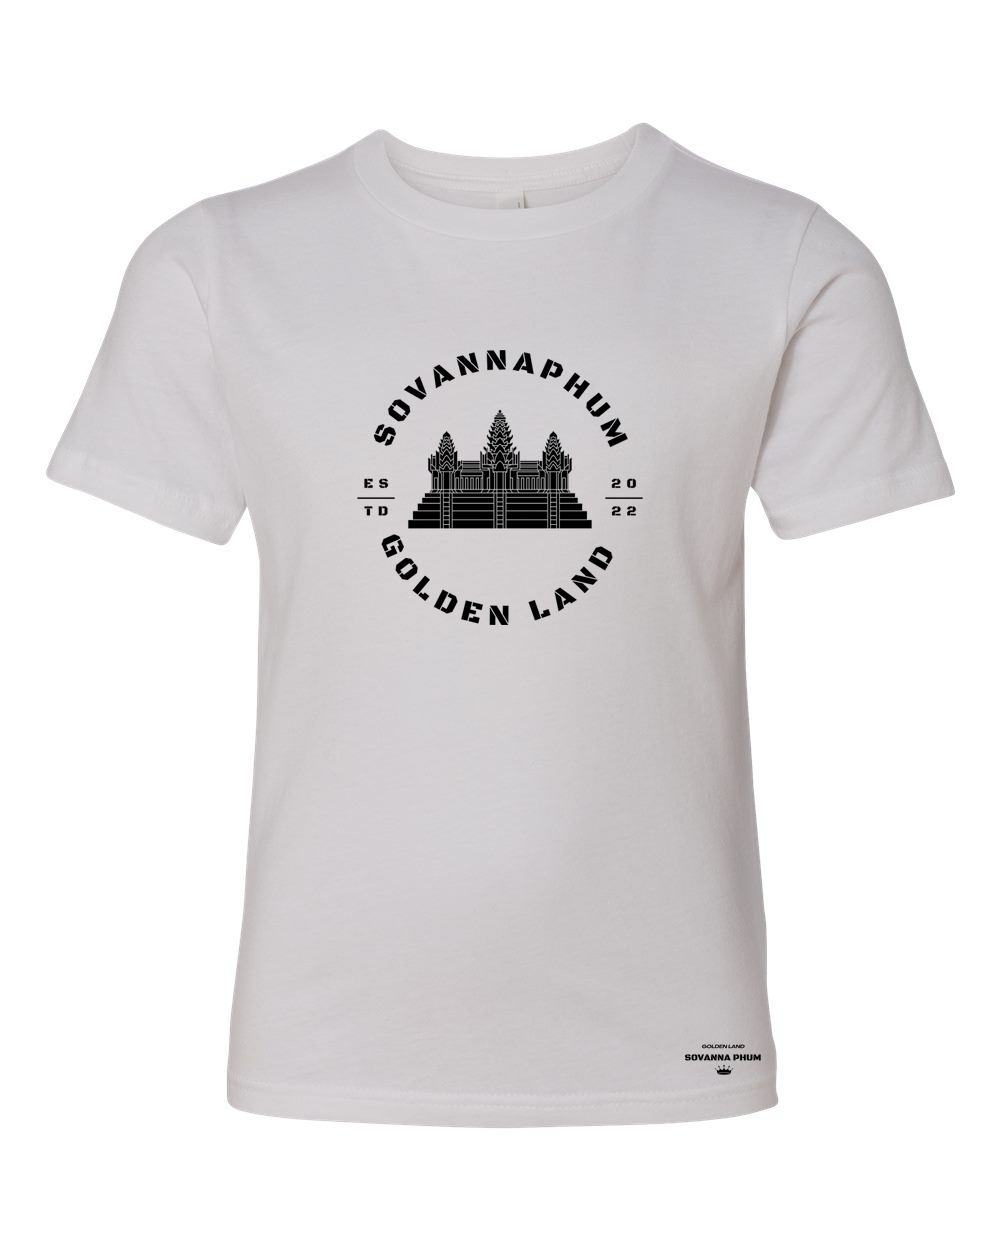 Toddler T-shirt Angkor Wat